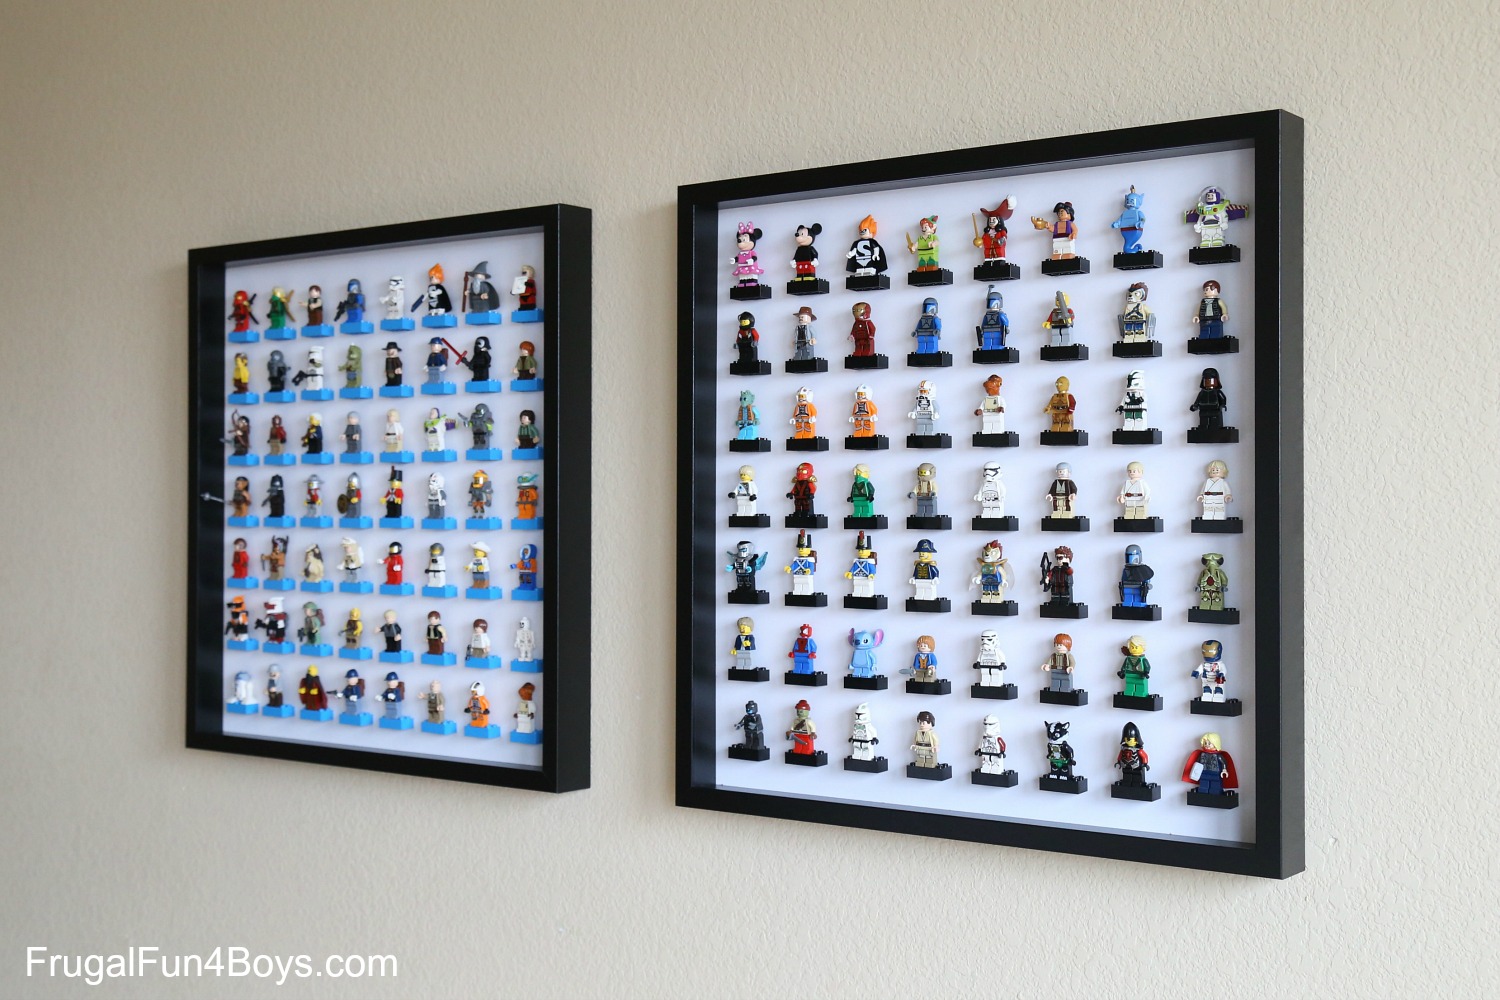 Lego minifiguras Display